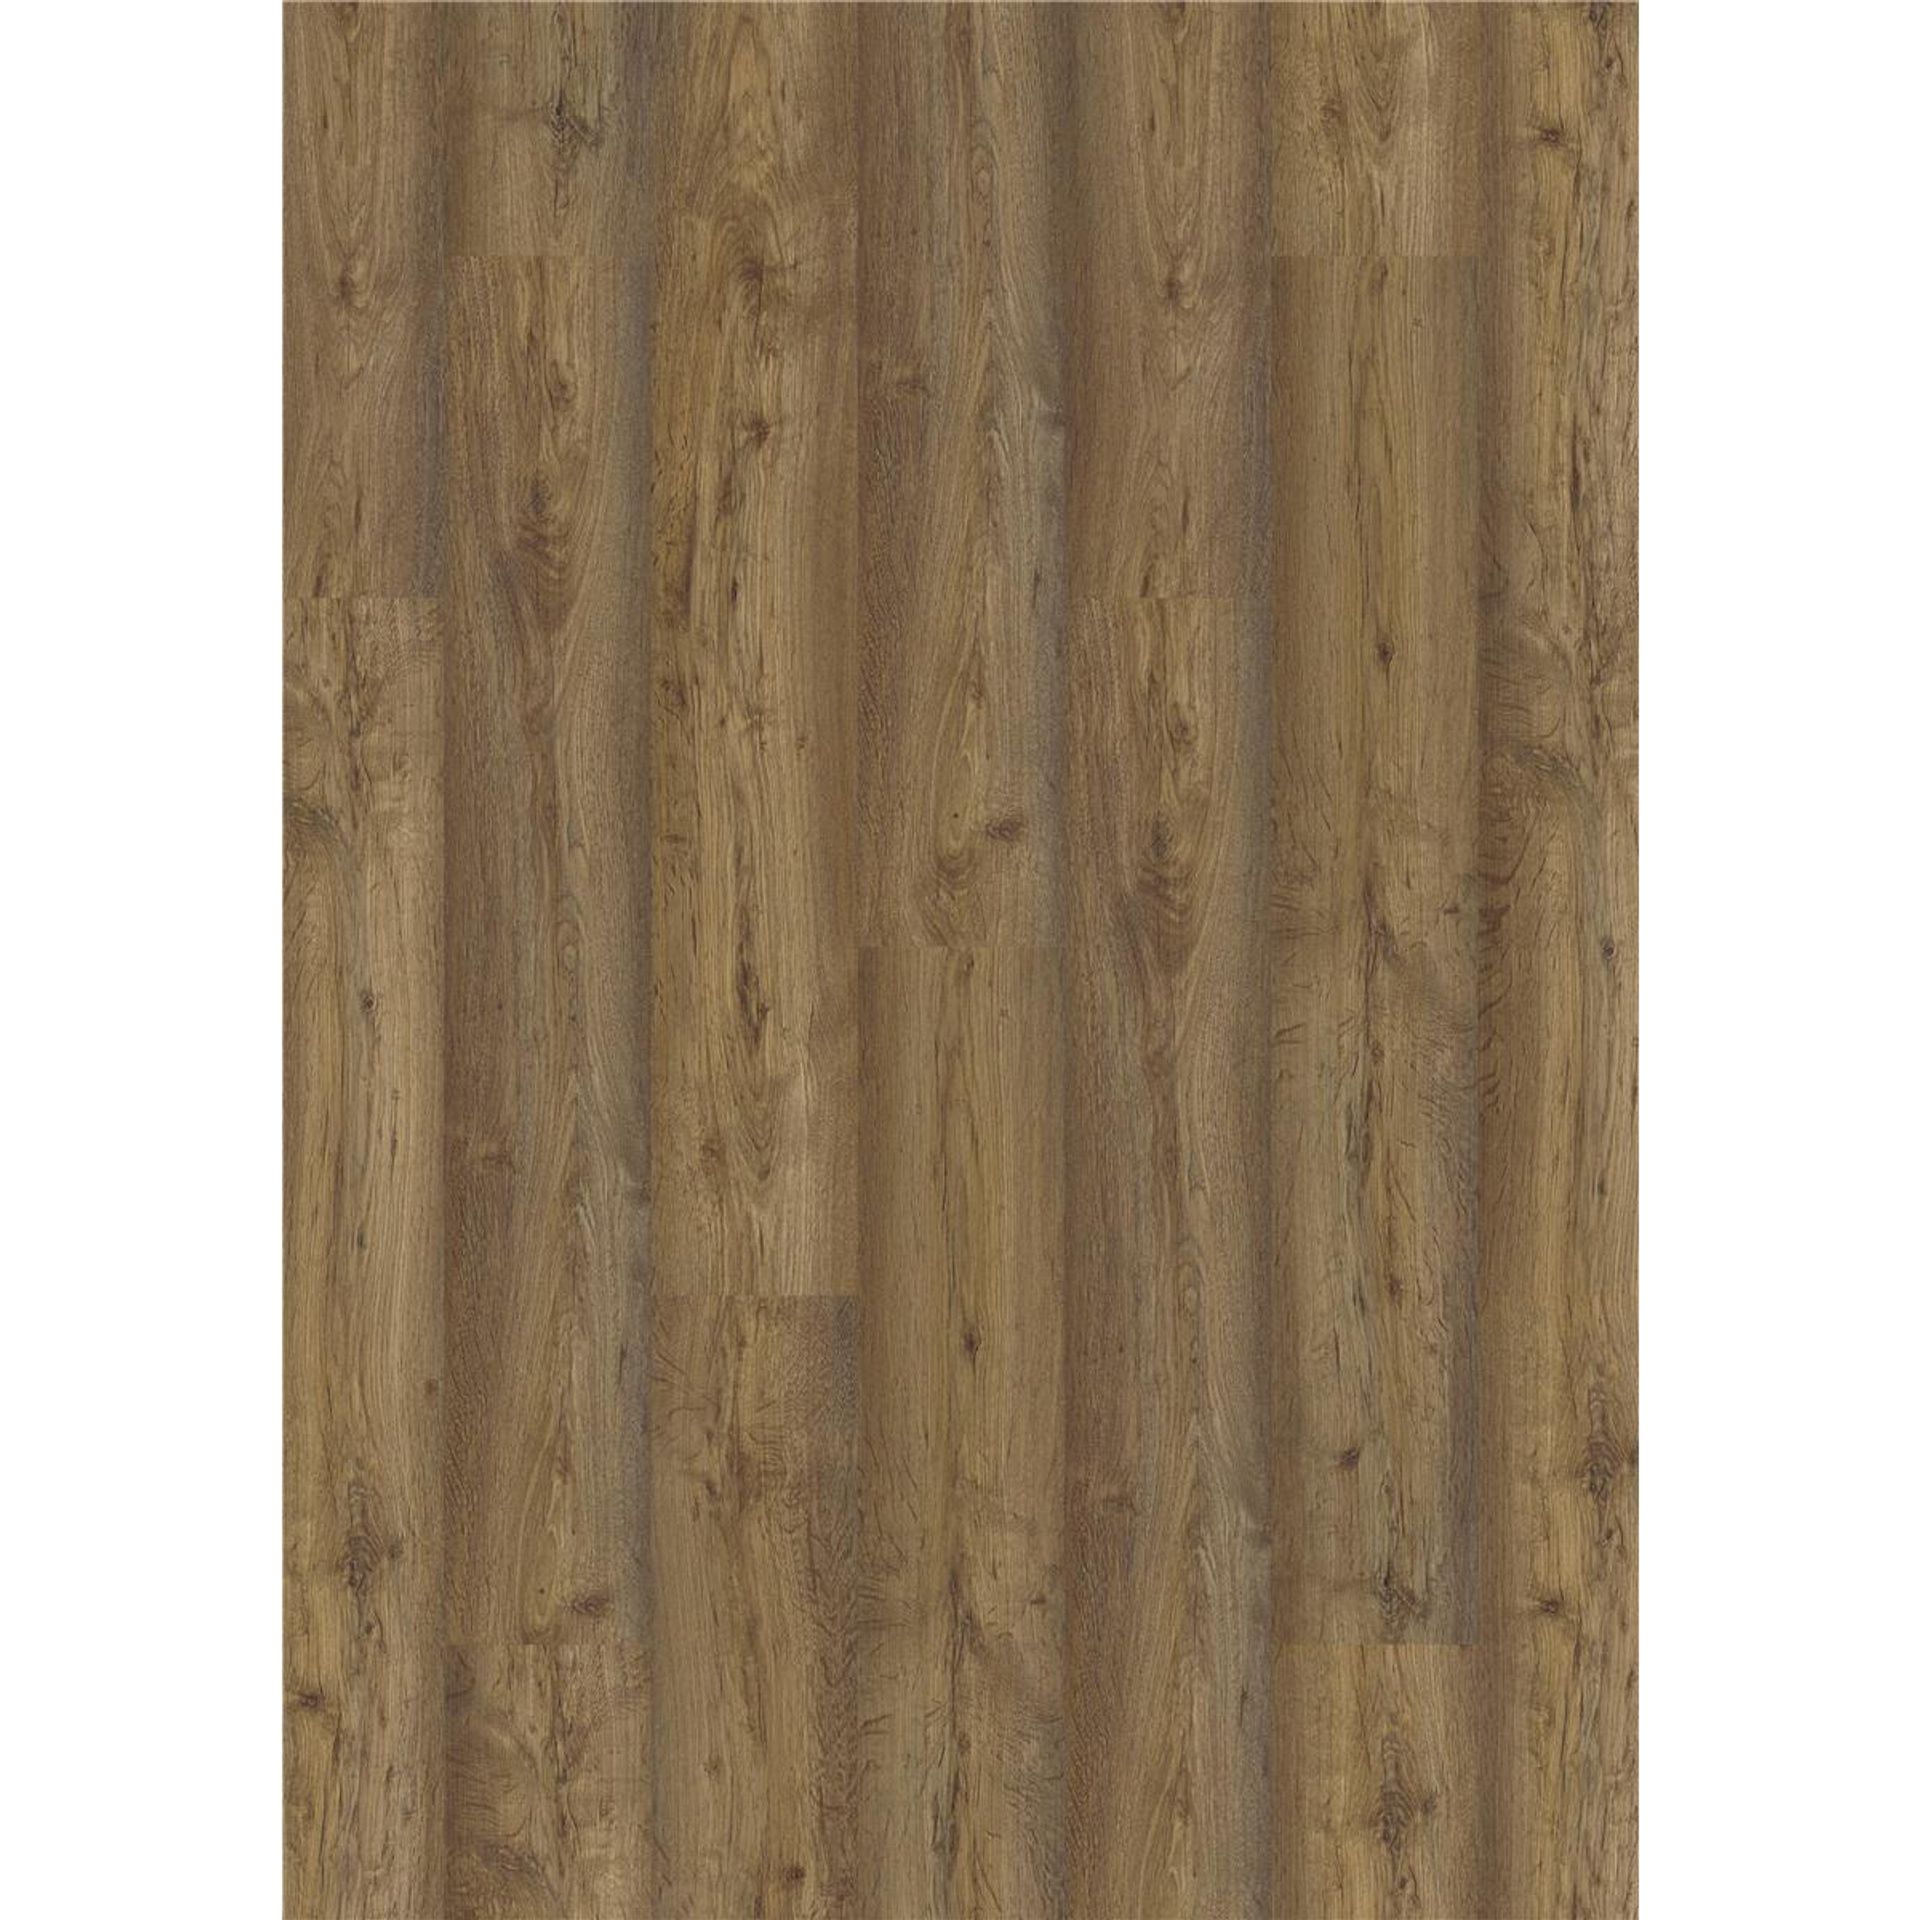 Laminat Planke 19,2 cm x 128,5 cm Klassik 1-Stab AS Oak coffee - 7 mm Stärke